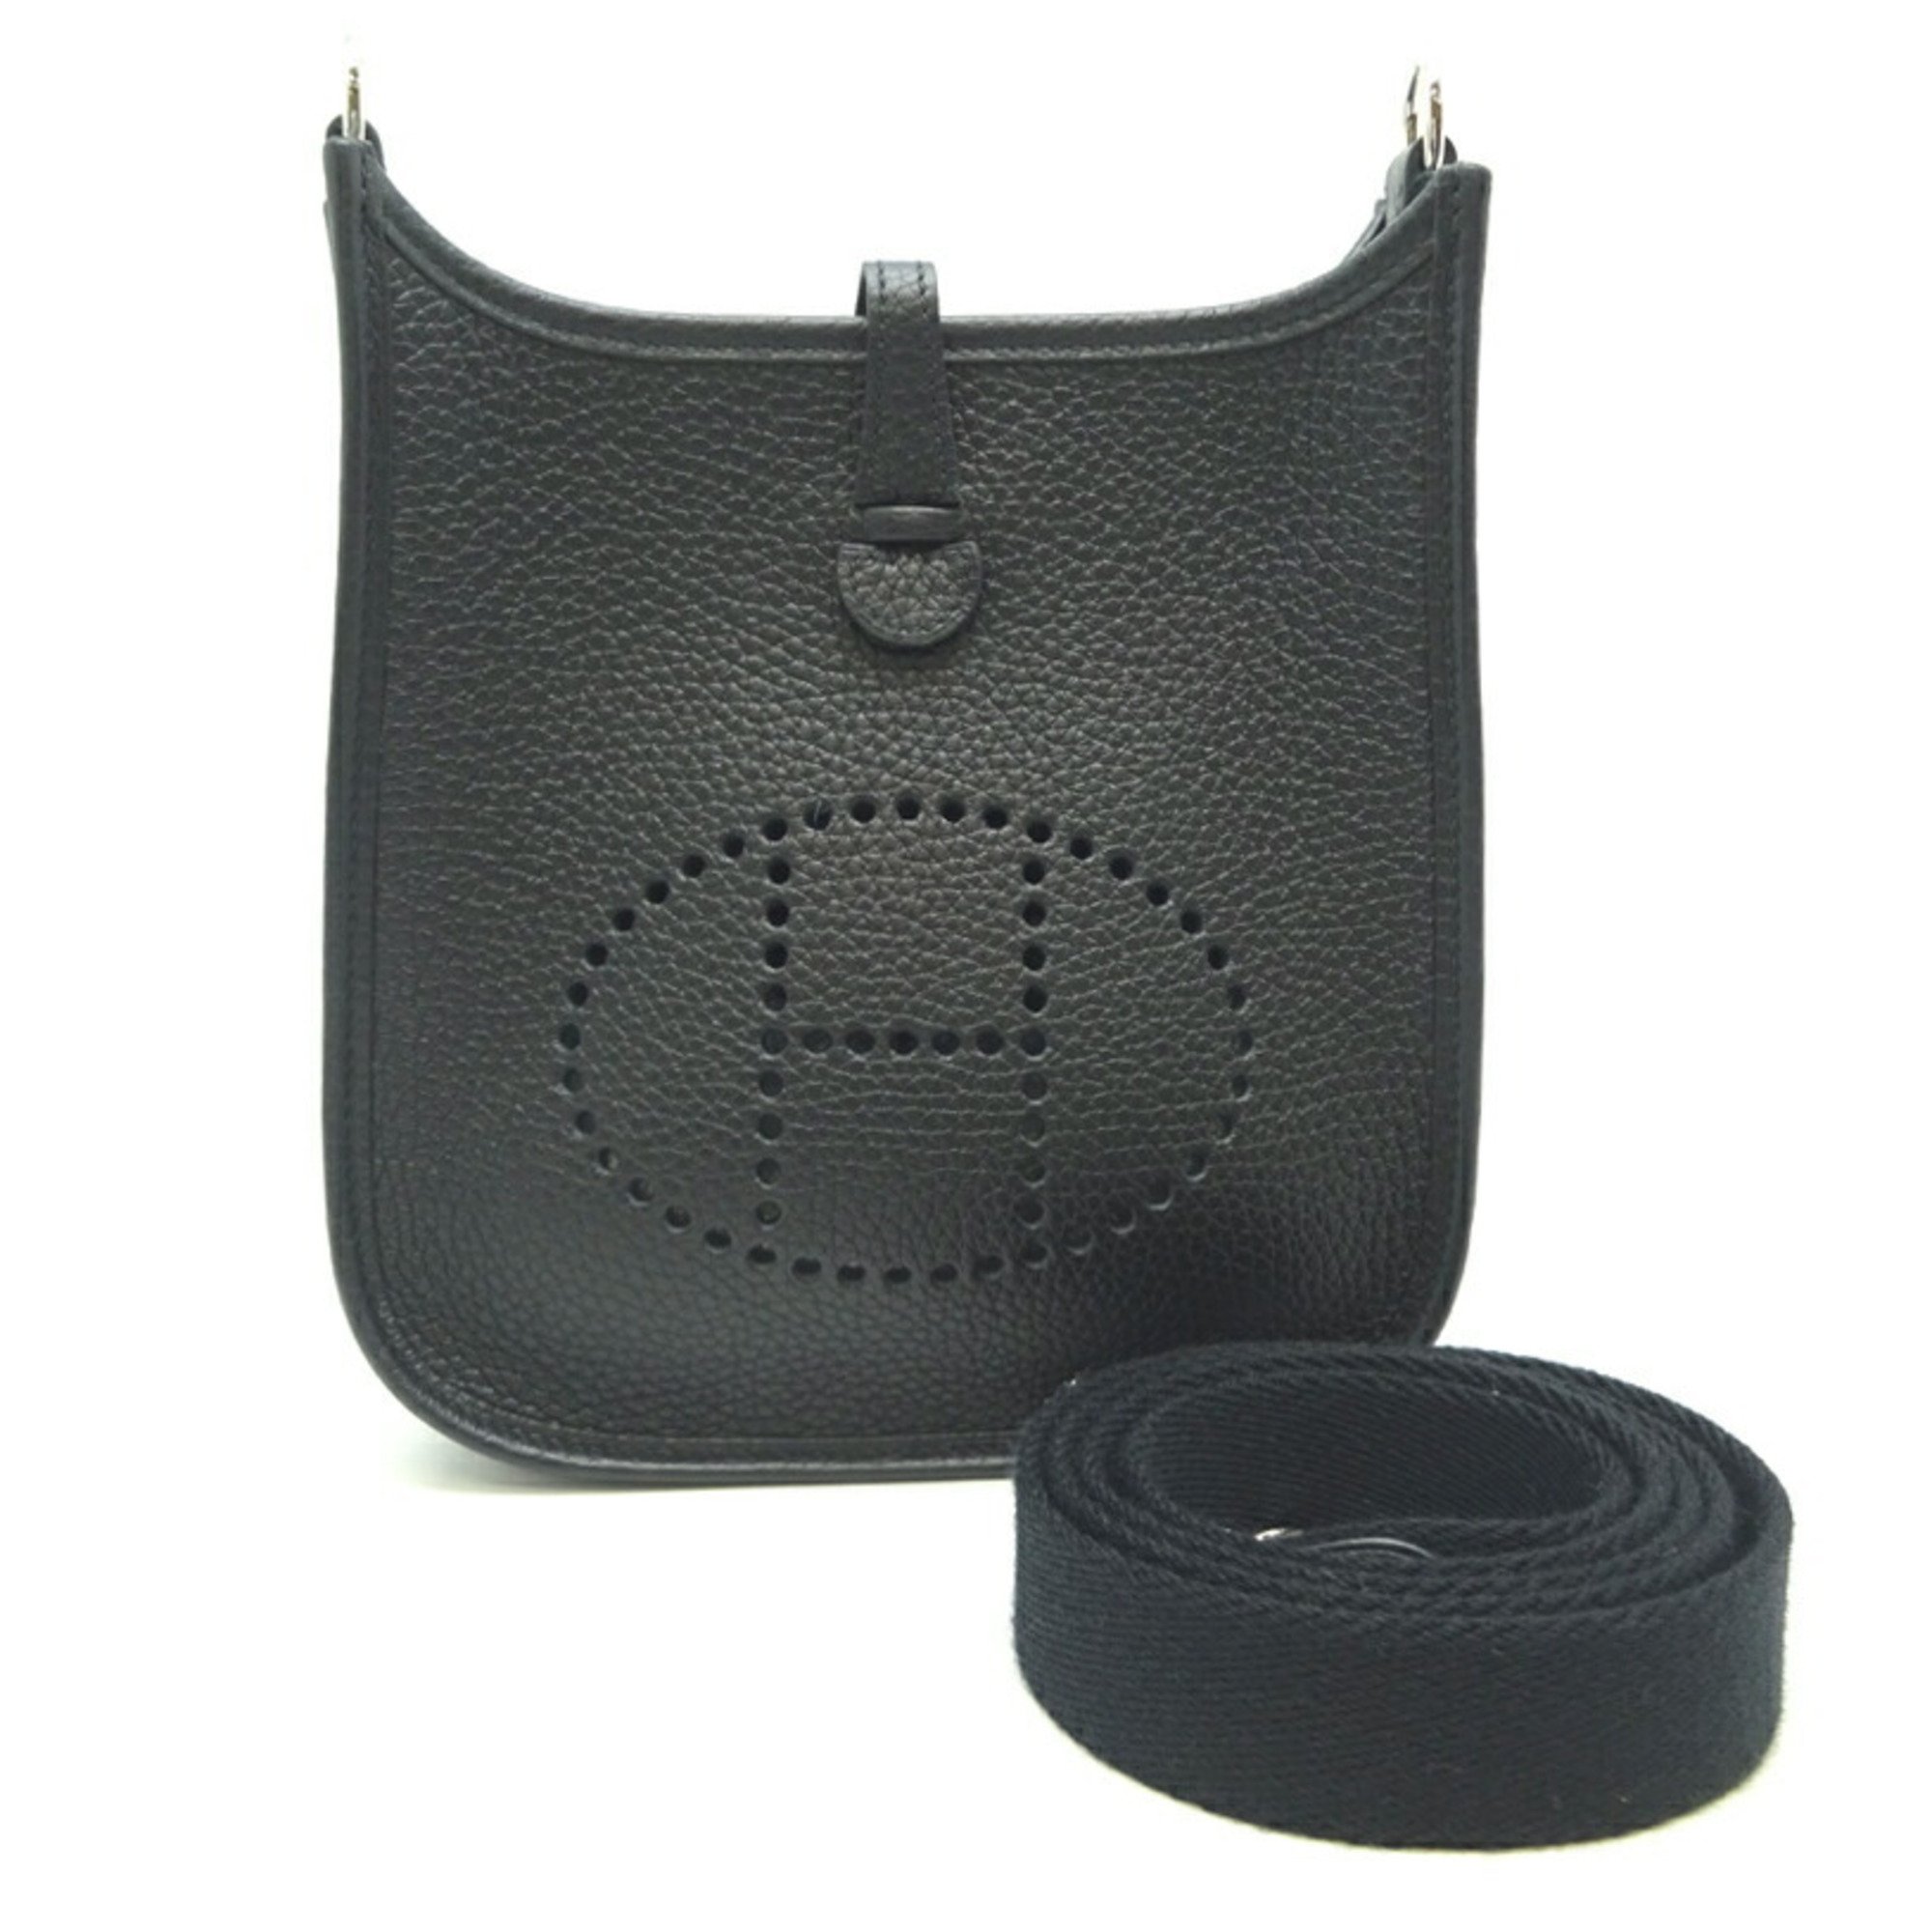 Hermes Evelyn TPM Amazon U stamp Palladium (silver) hardware Women's shoulder bag Taurillon Noir (black)